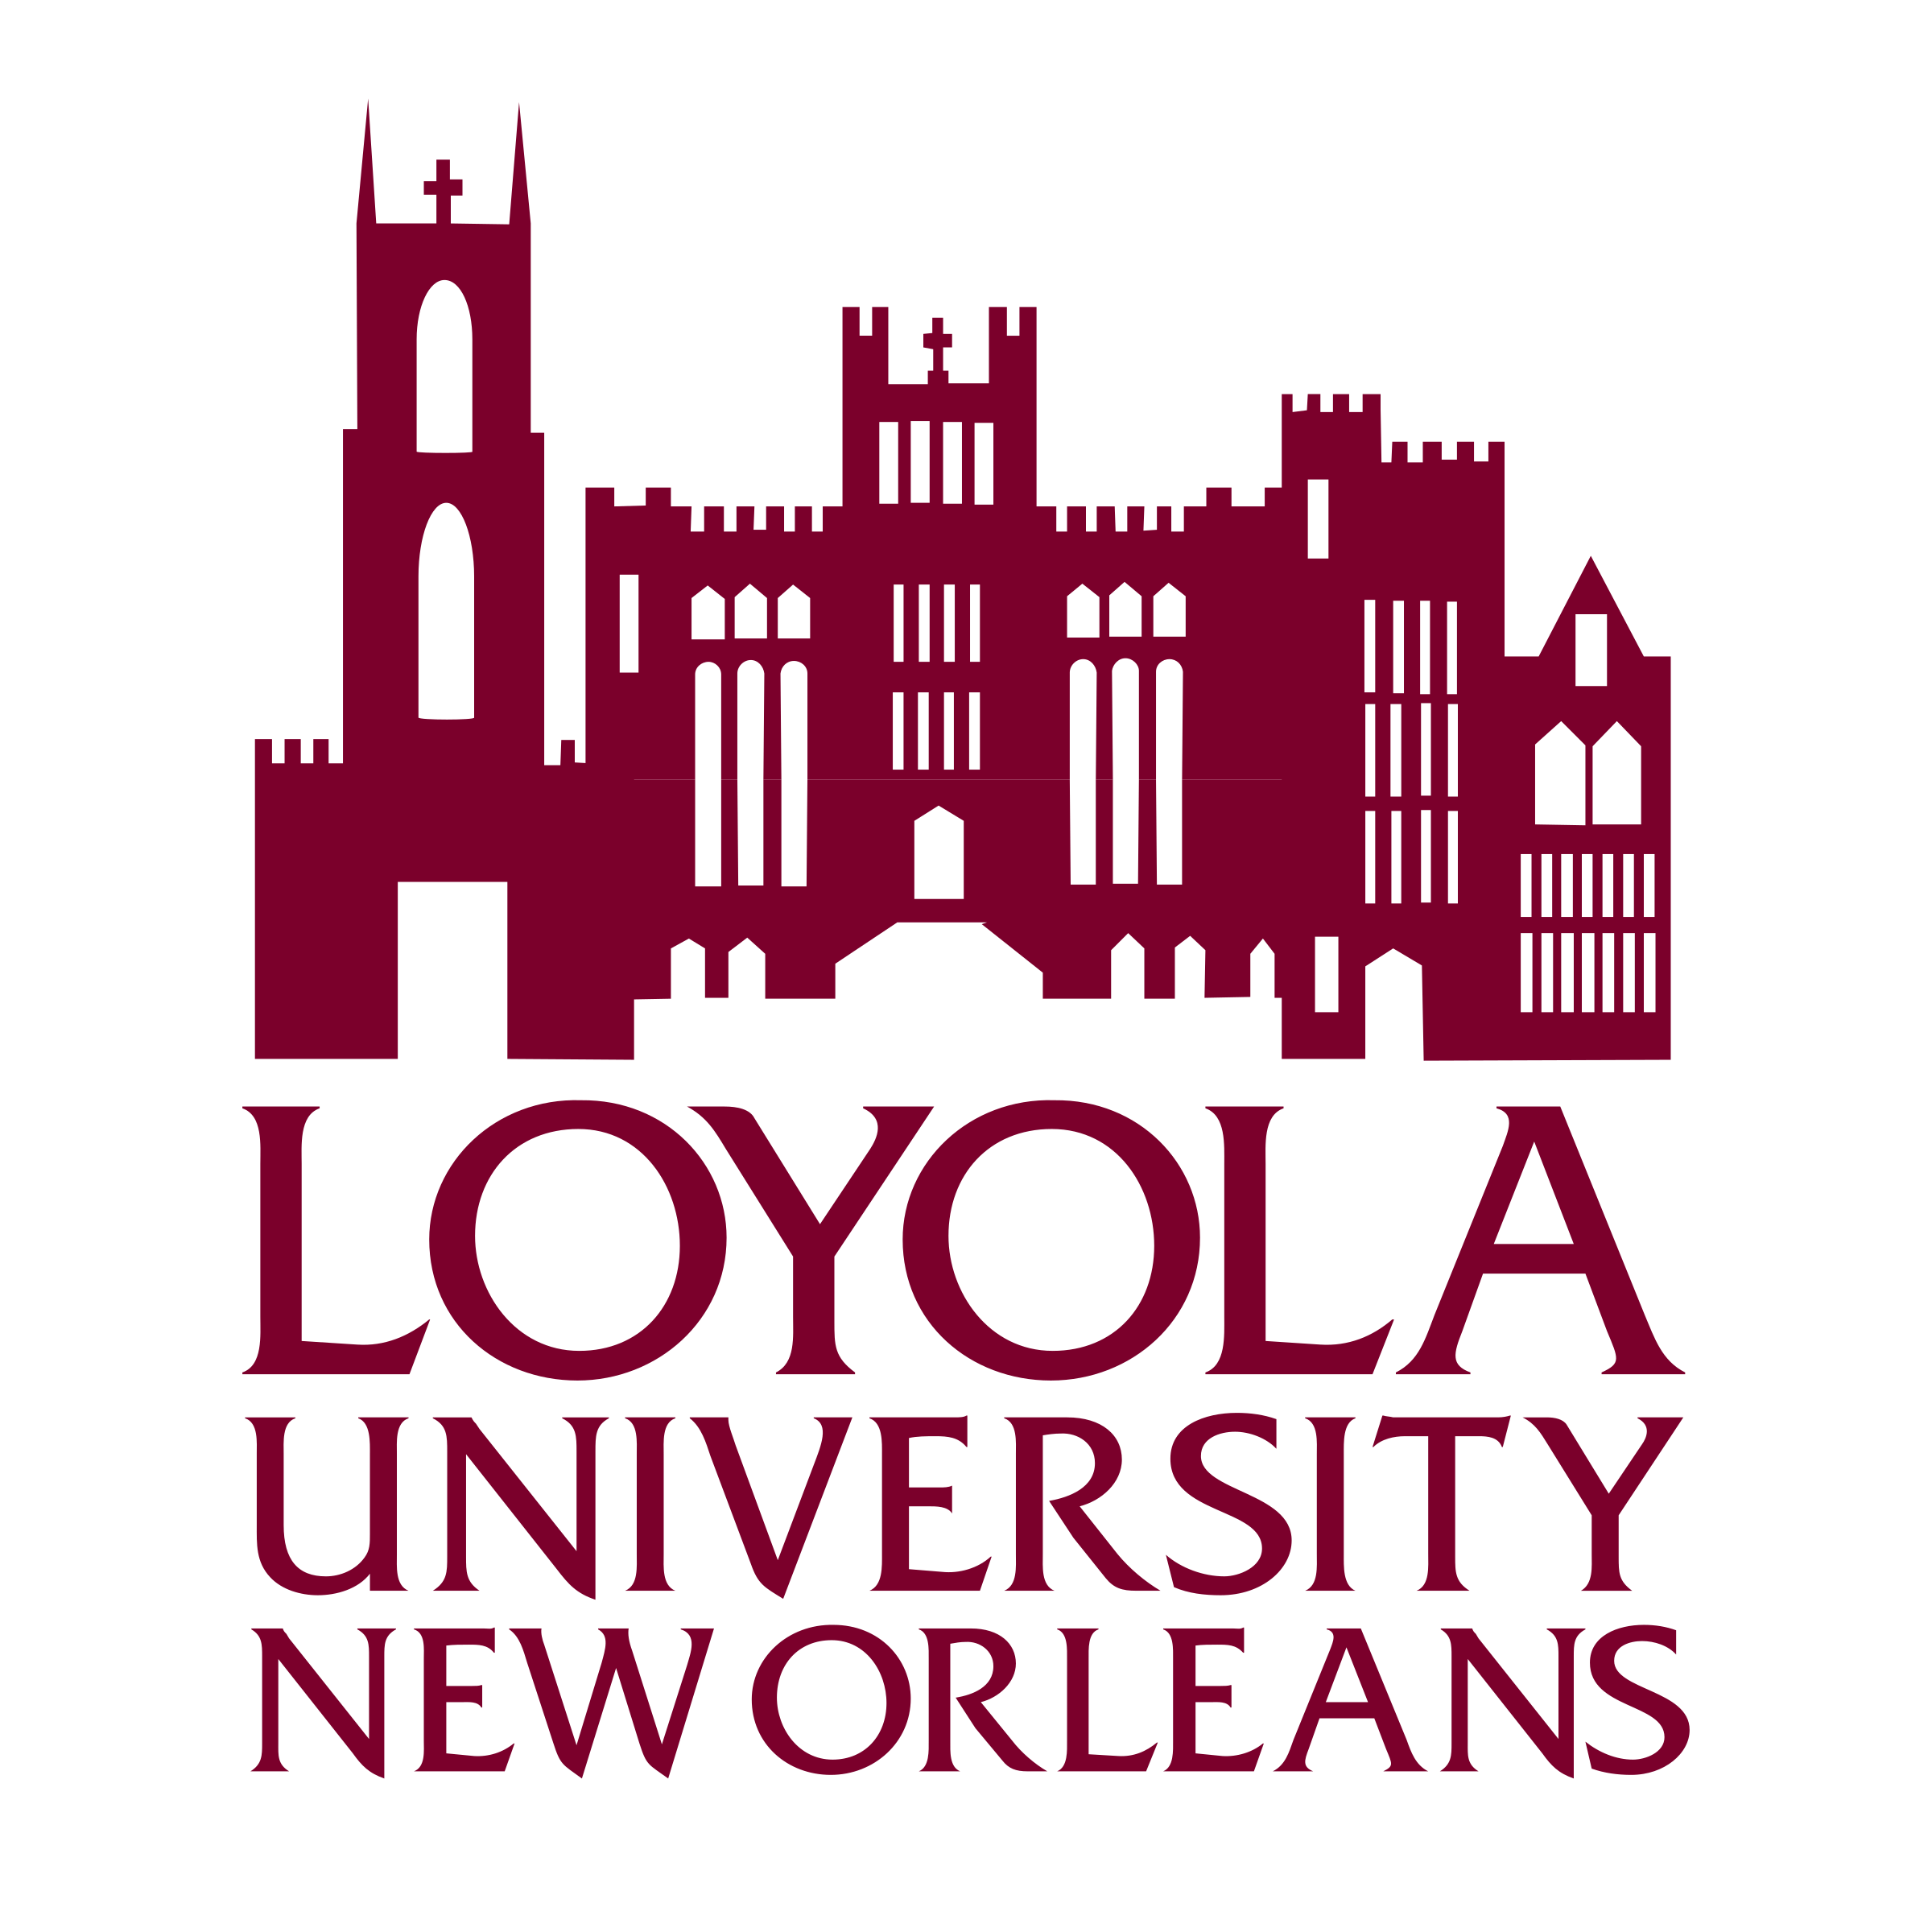 Loyola Logo - Loyola University New Orleans Logo PNG Transparent & SVG Vector ...